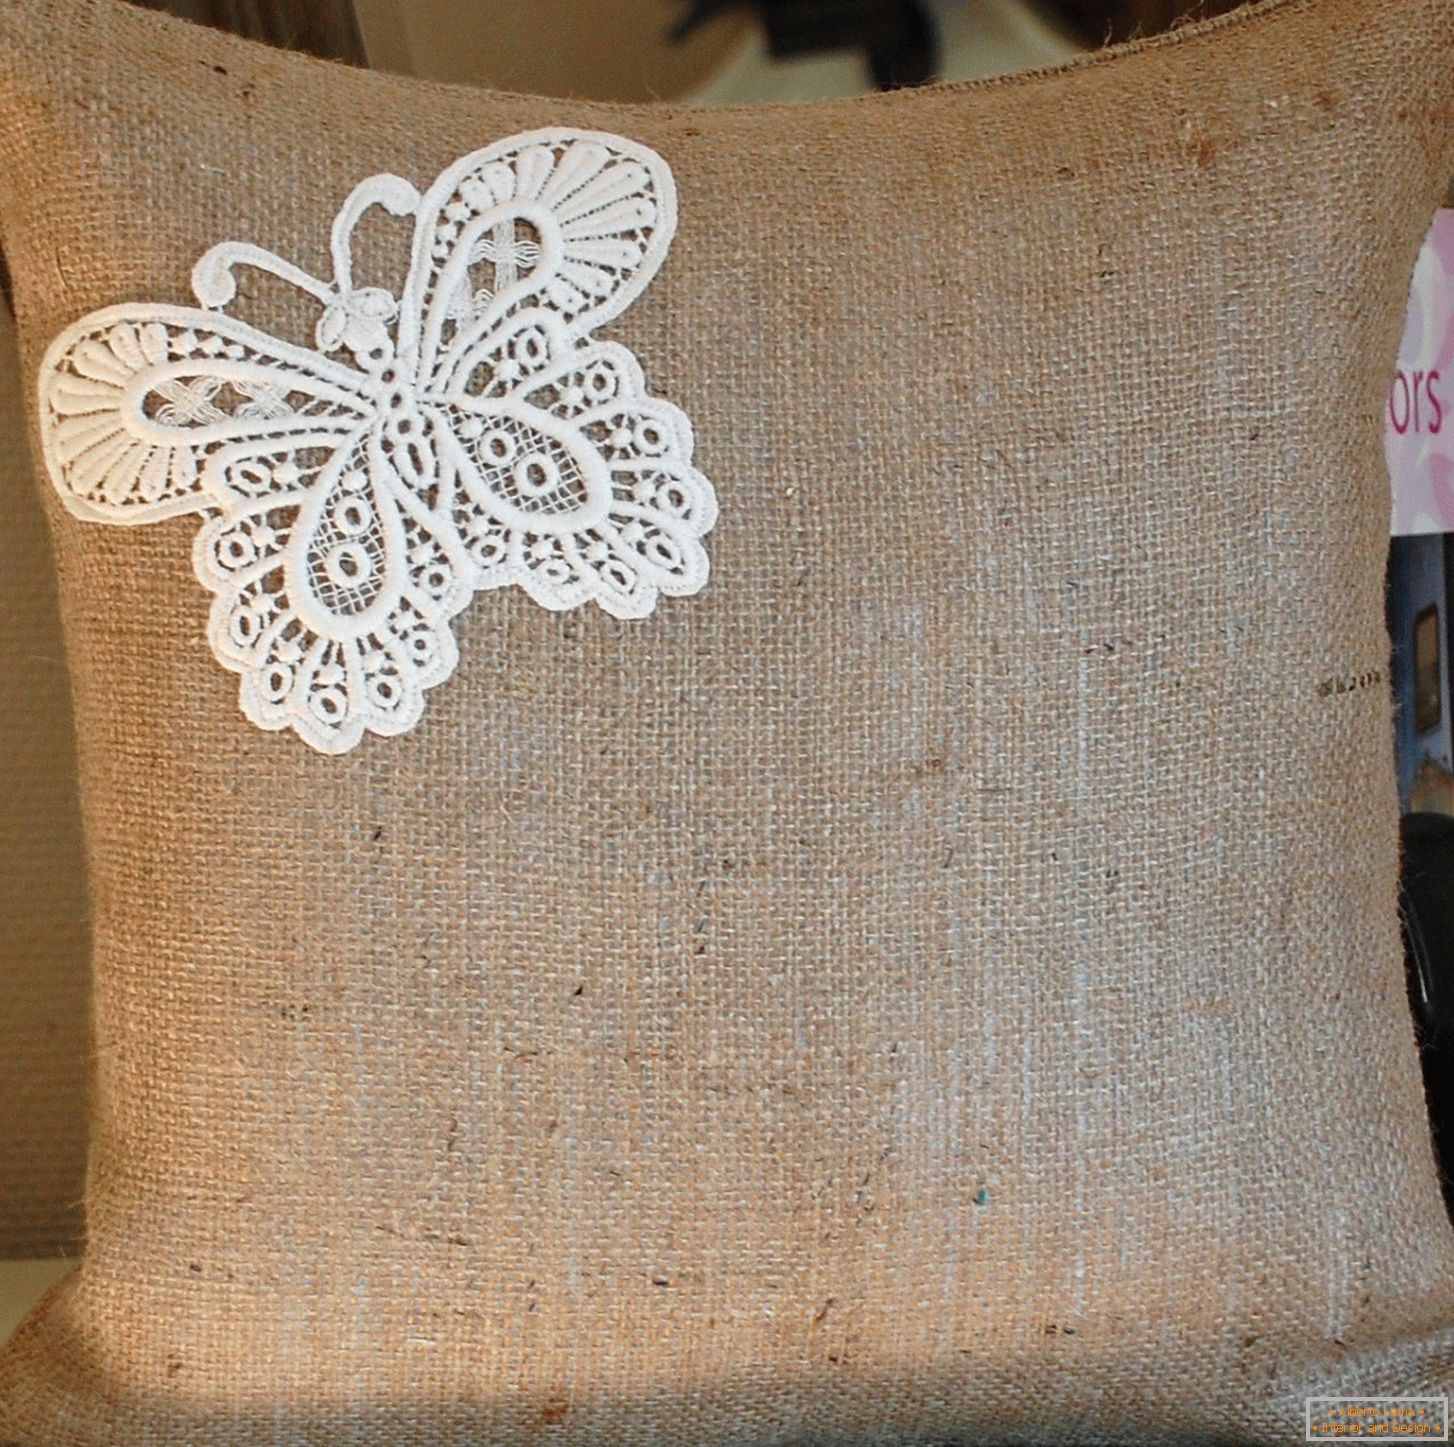 Farfalla sul cuscino